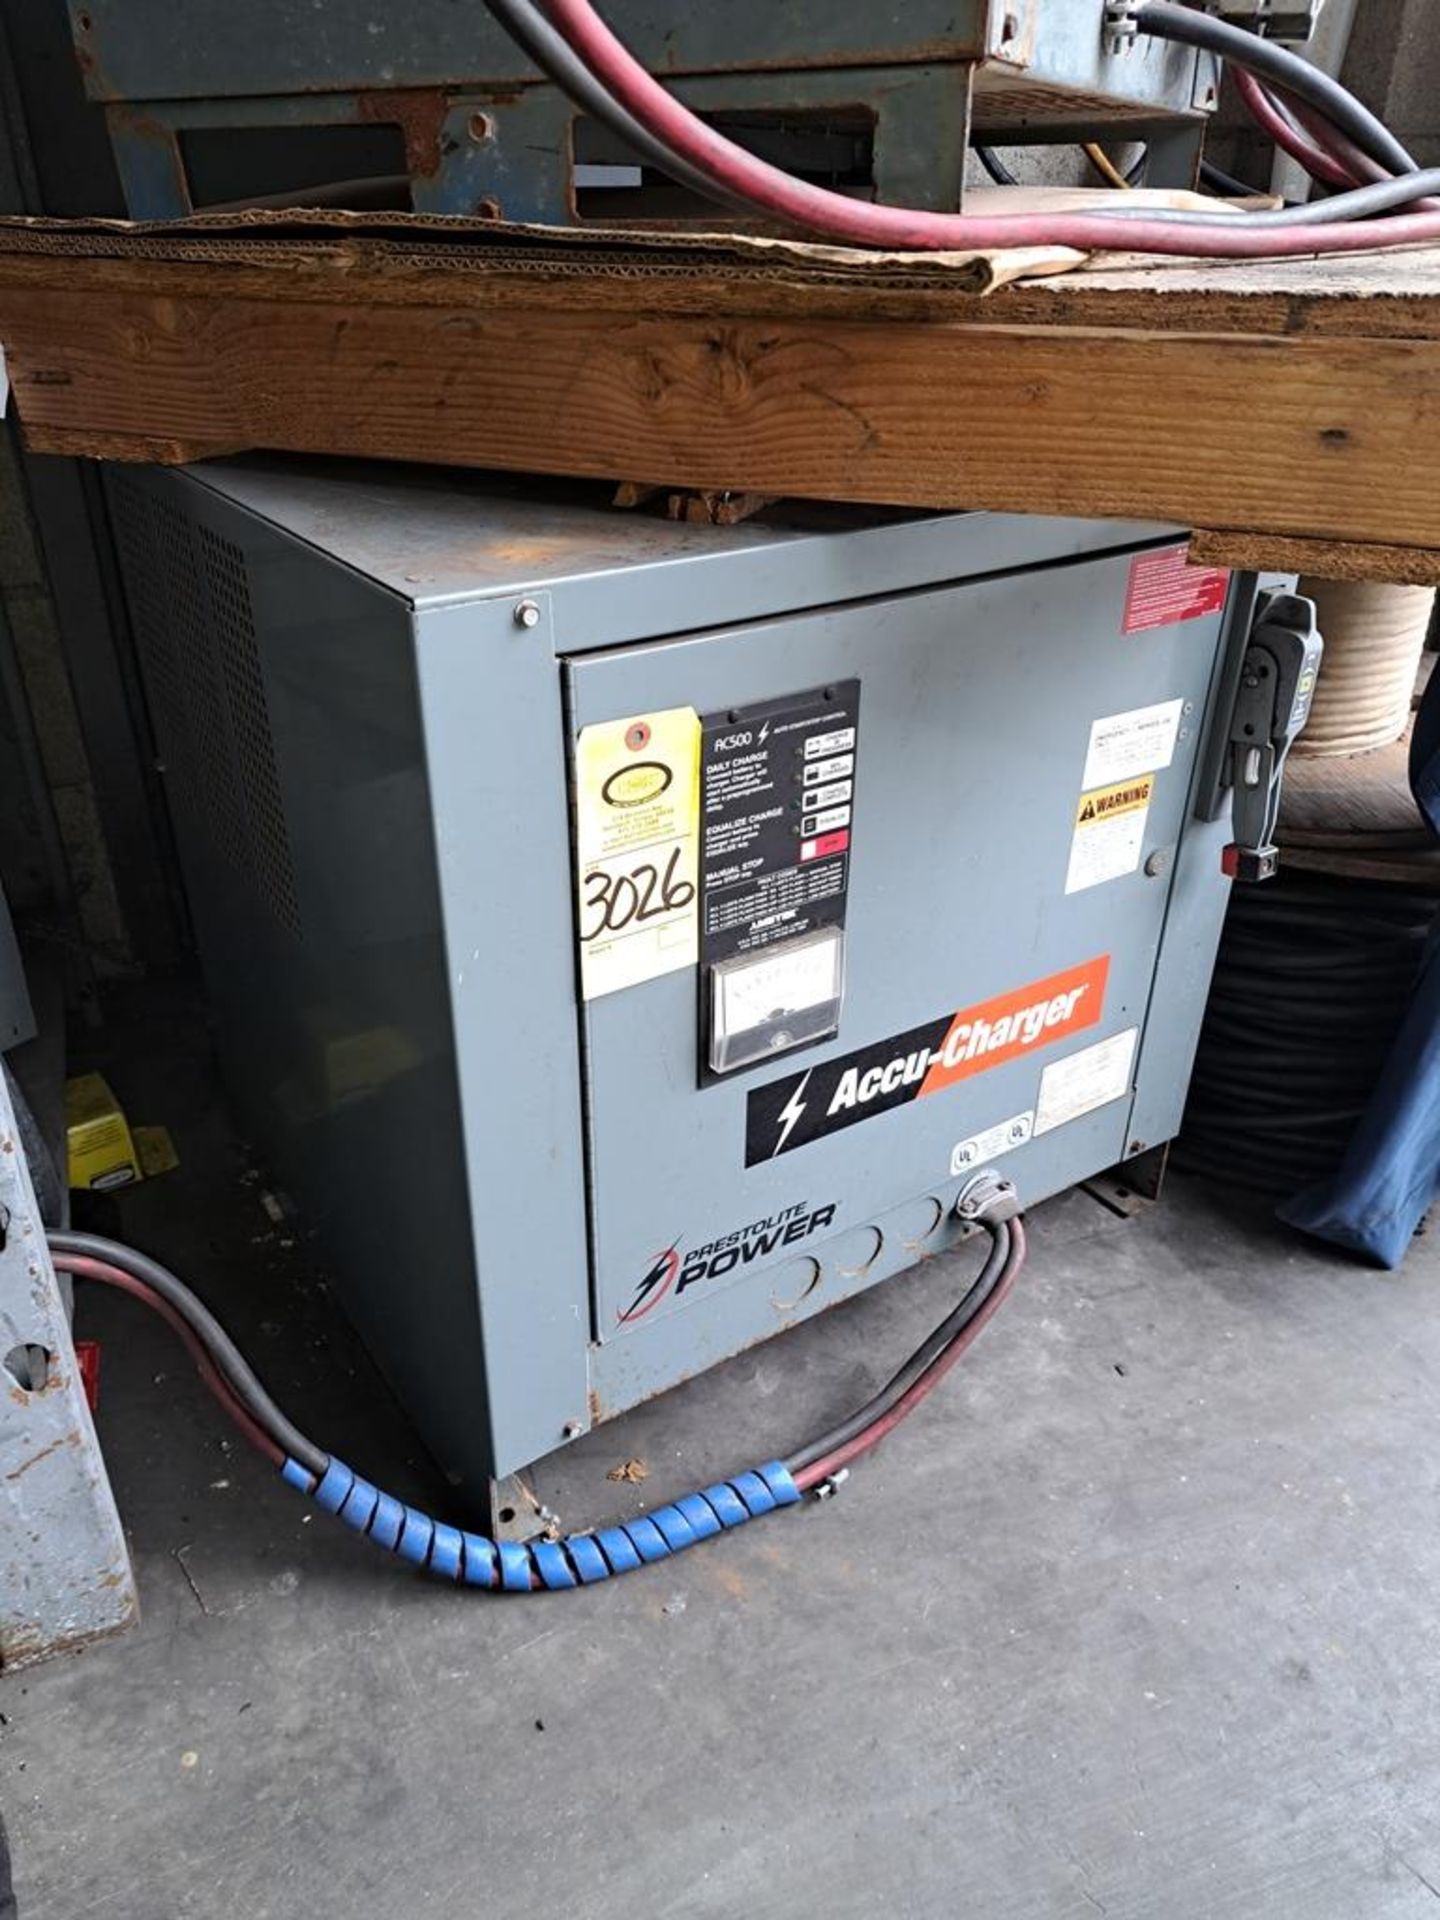 Prestolite Power Mdl. 510C3-12 Battery Charger, 24 volt, 12 cell, 230 volts, Ser. #103CS03443 (